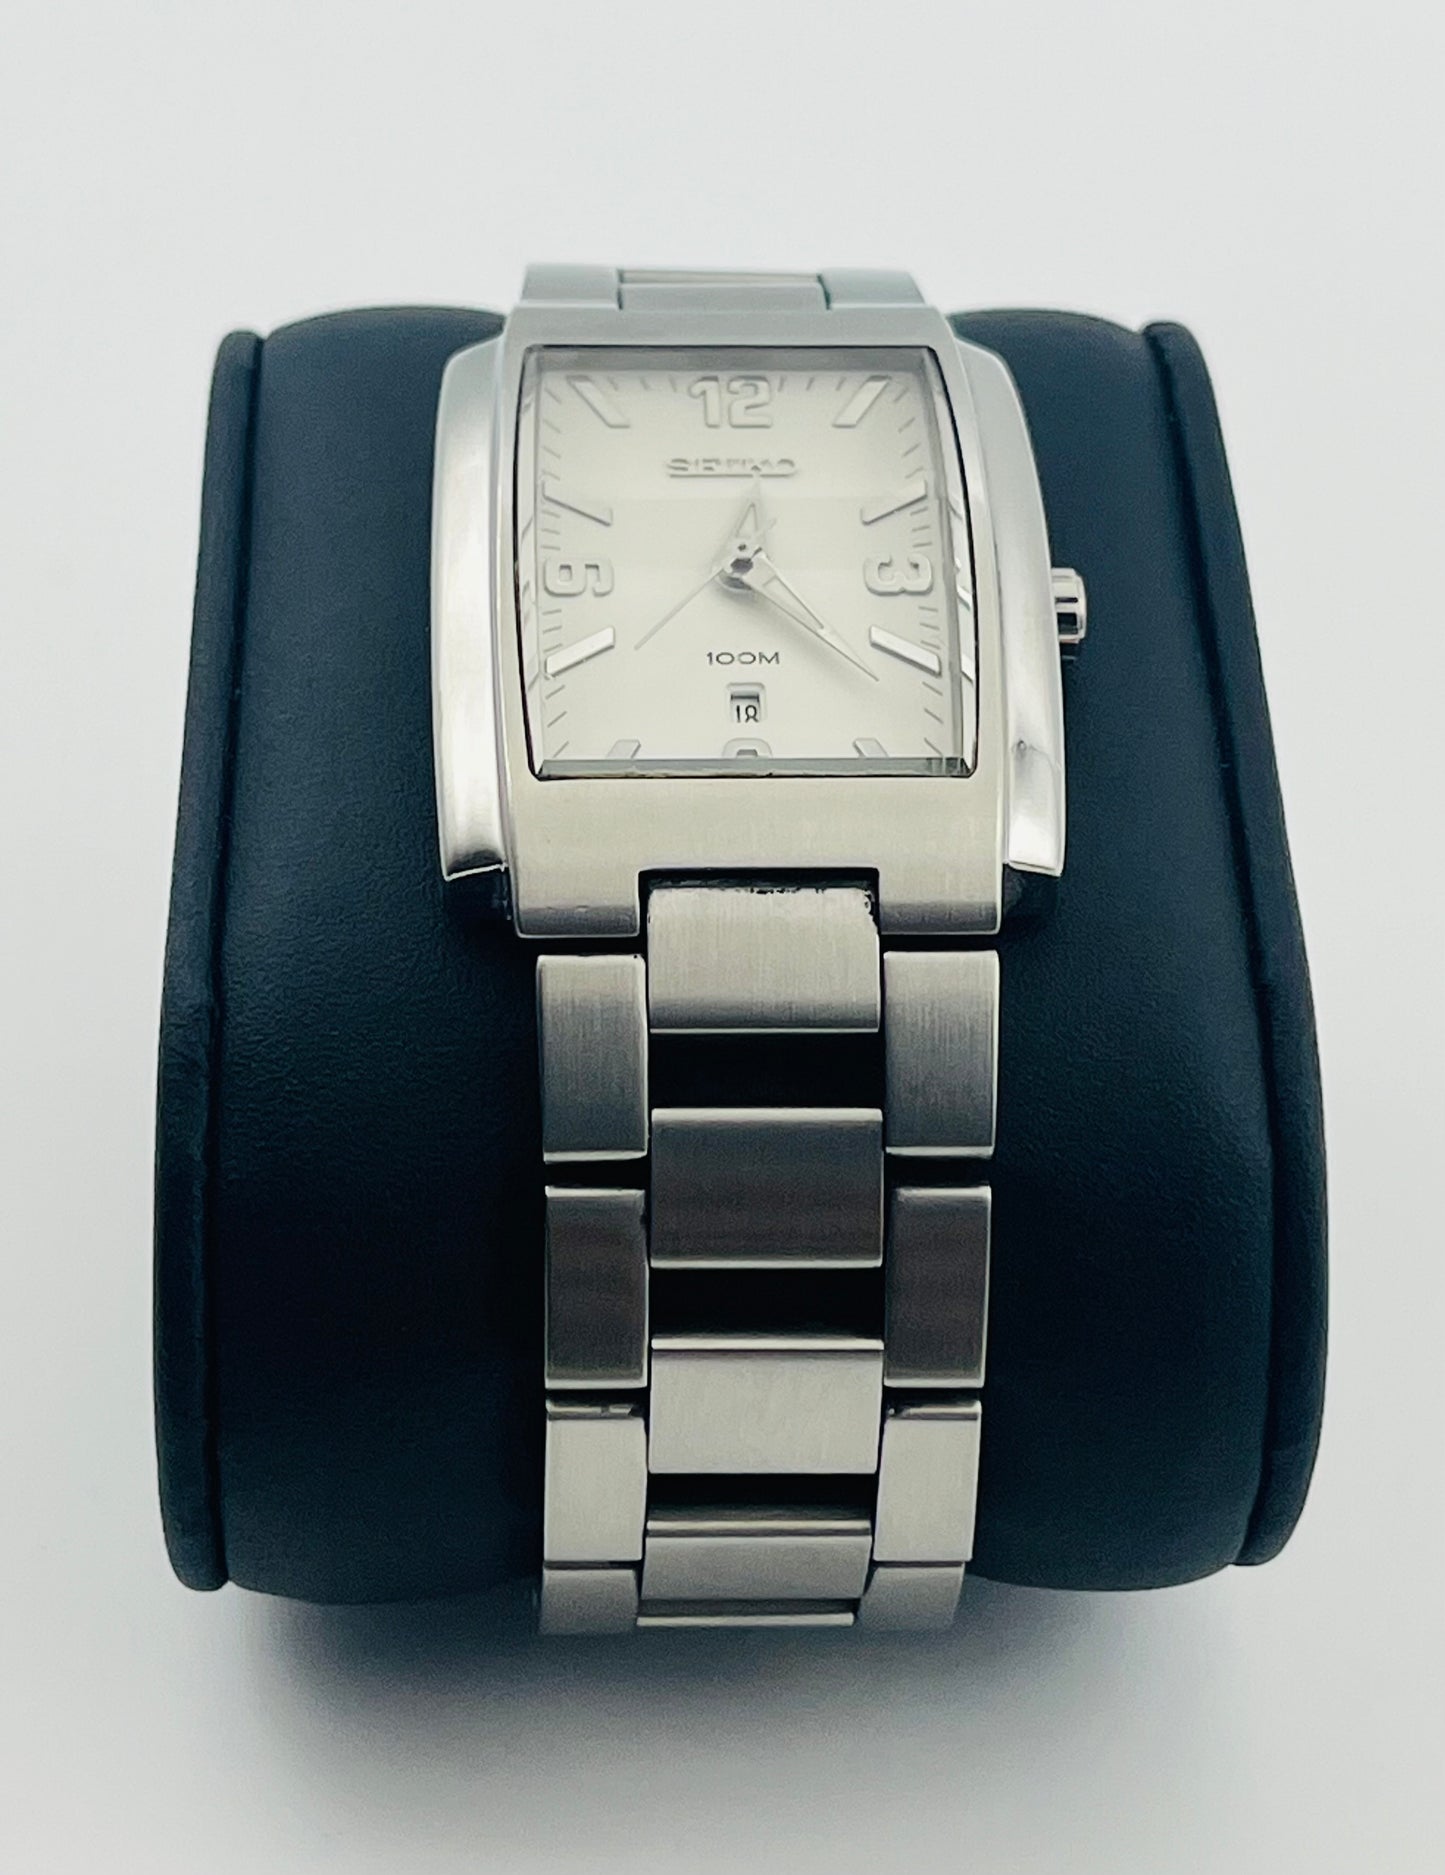 Seiko 1999 silver tone, tank style watch